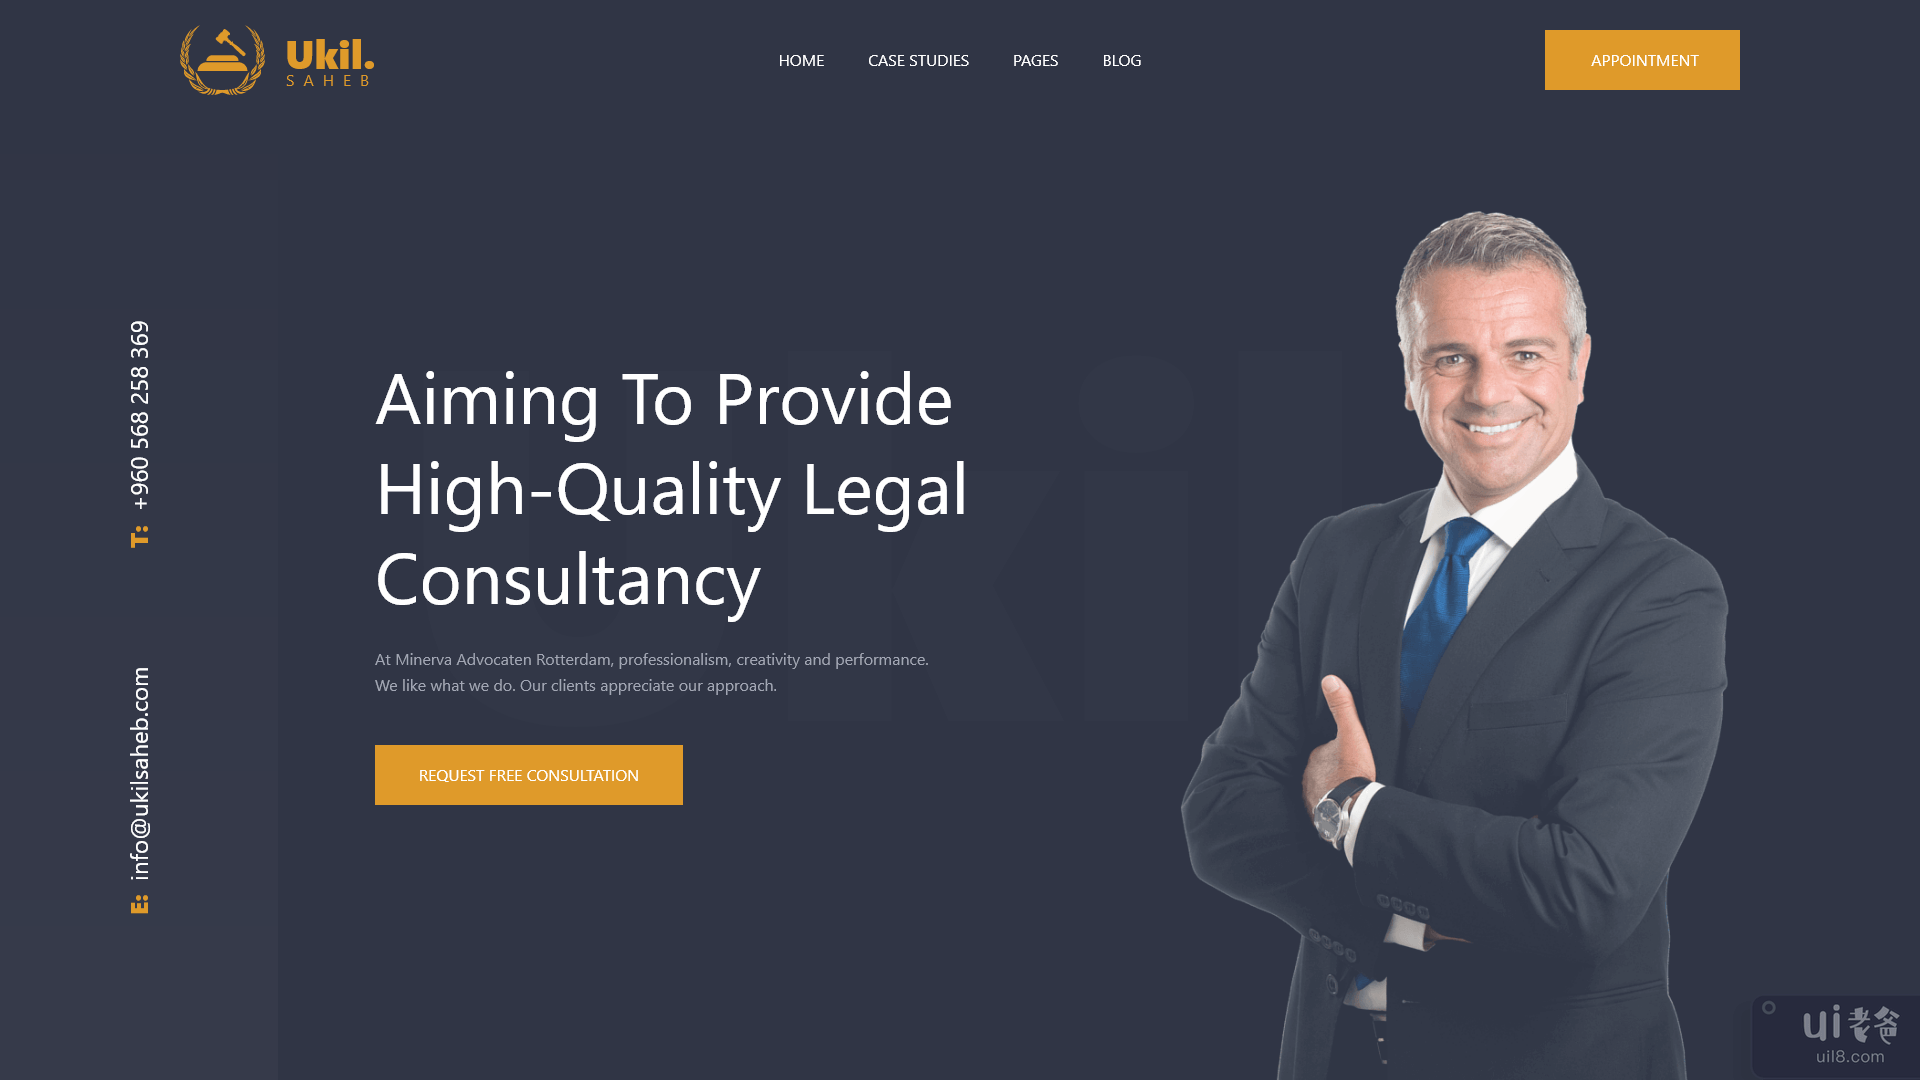 数字律师网站横幅(Digital Lawyer Website Banner)插图